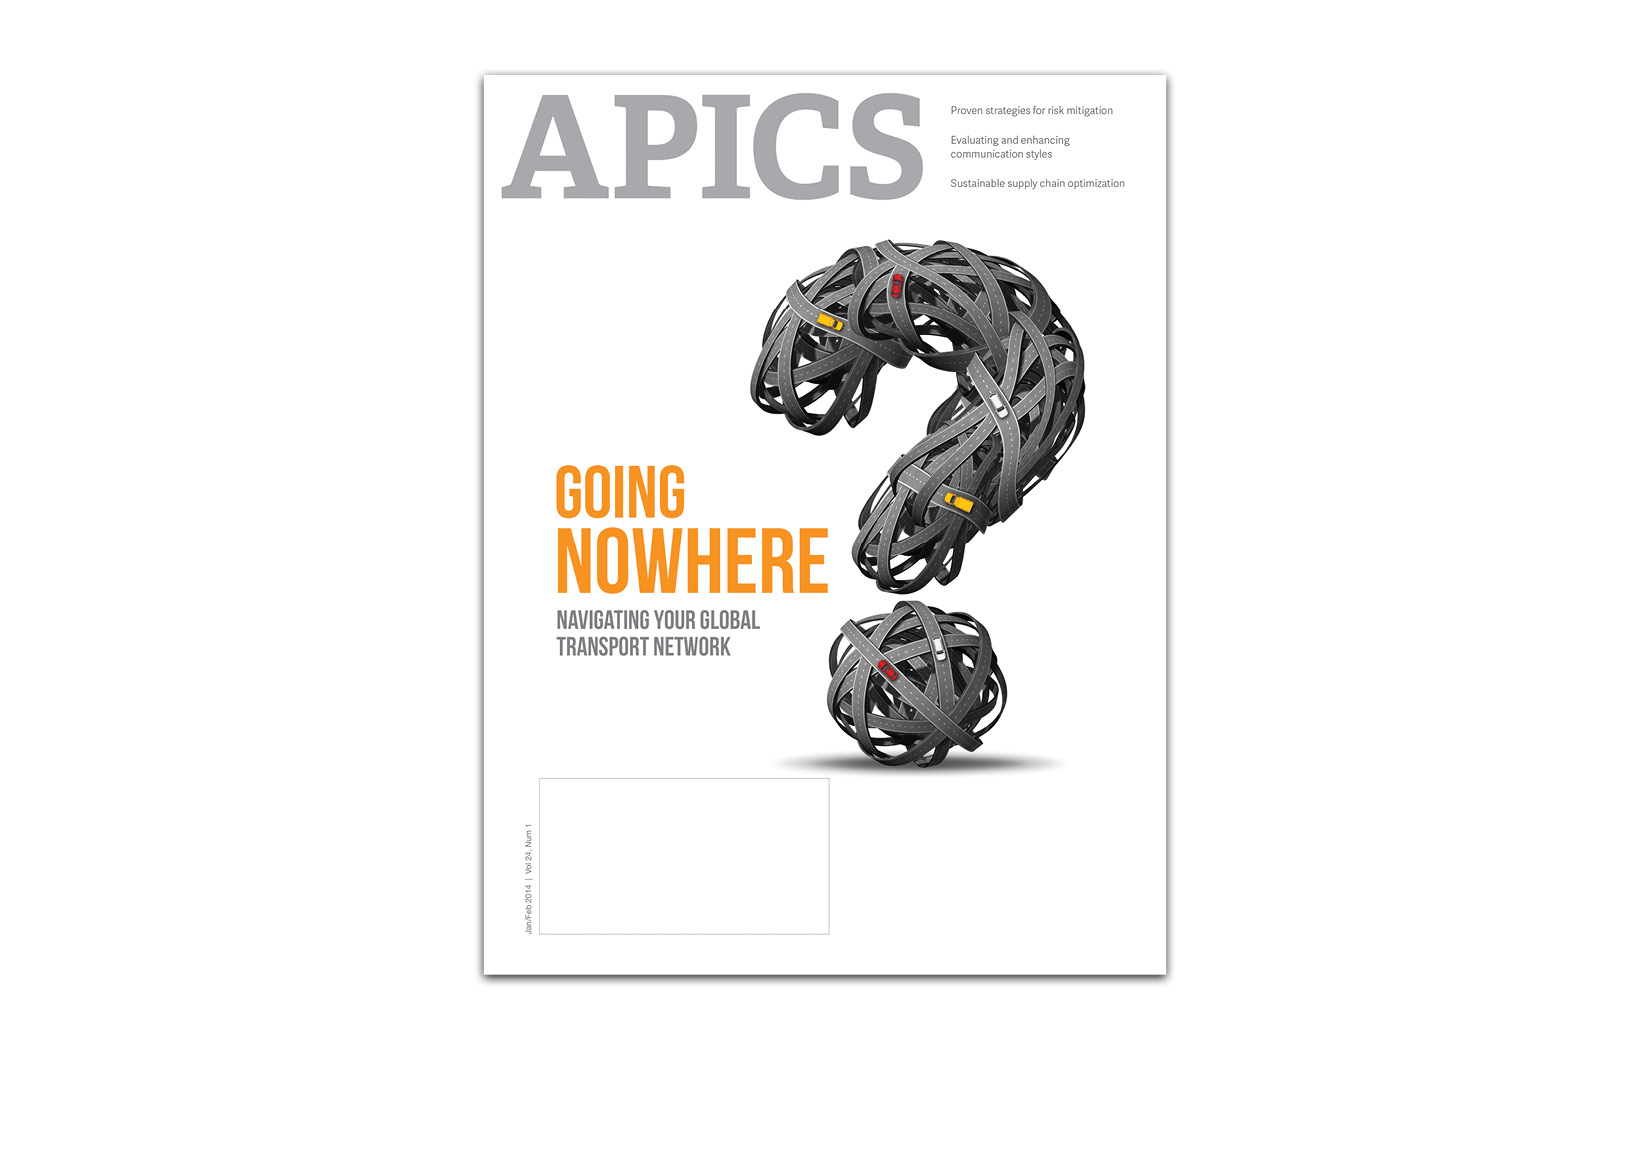  Cover for the January/February 2014&nbsp; APICS  magazine. 